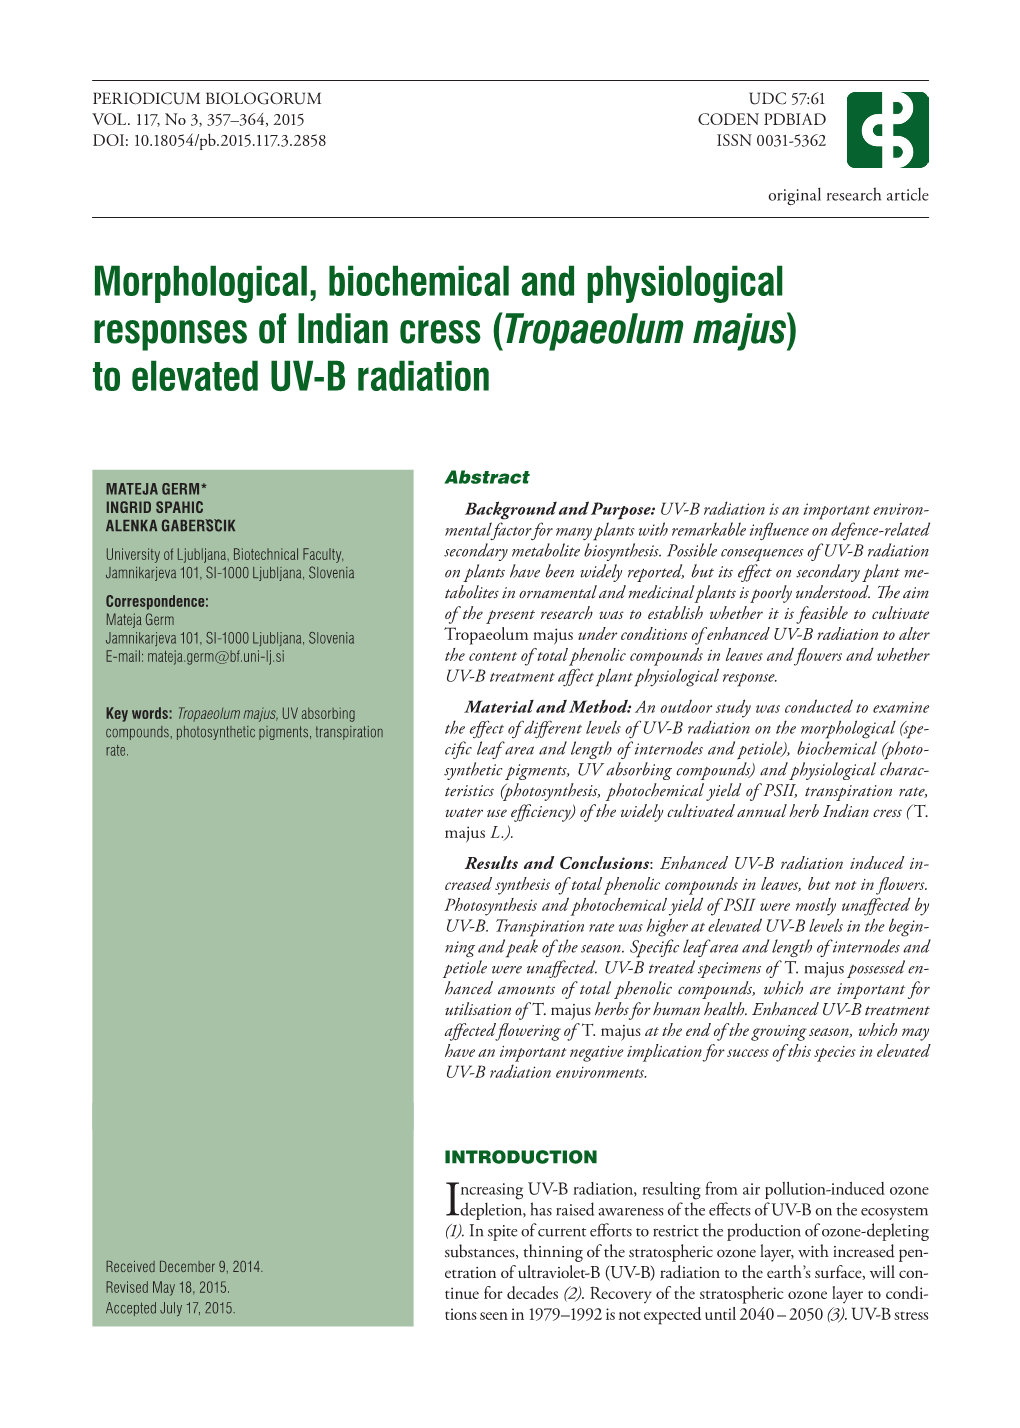 Tropaeolum Majus) to Elevated UV-B Radiation